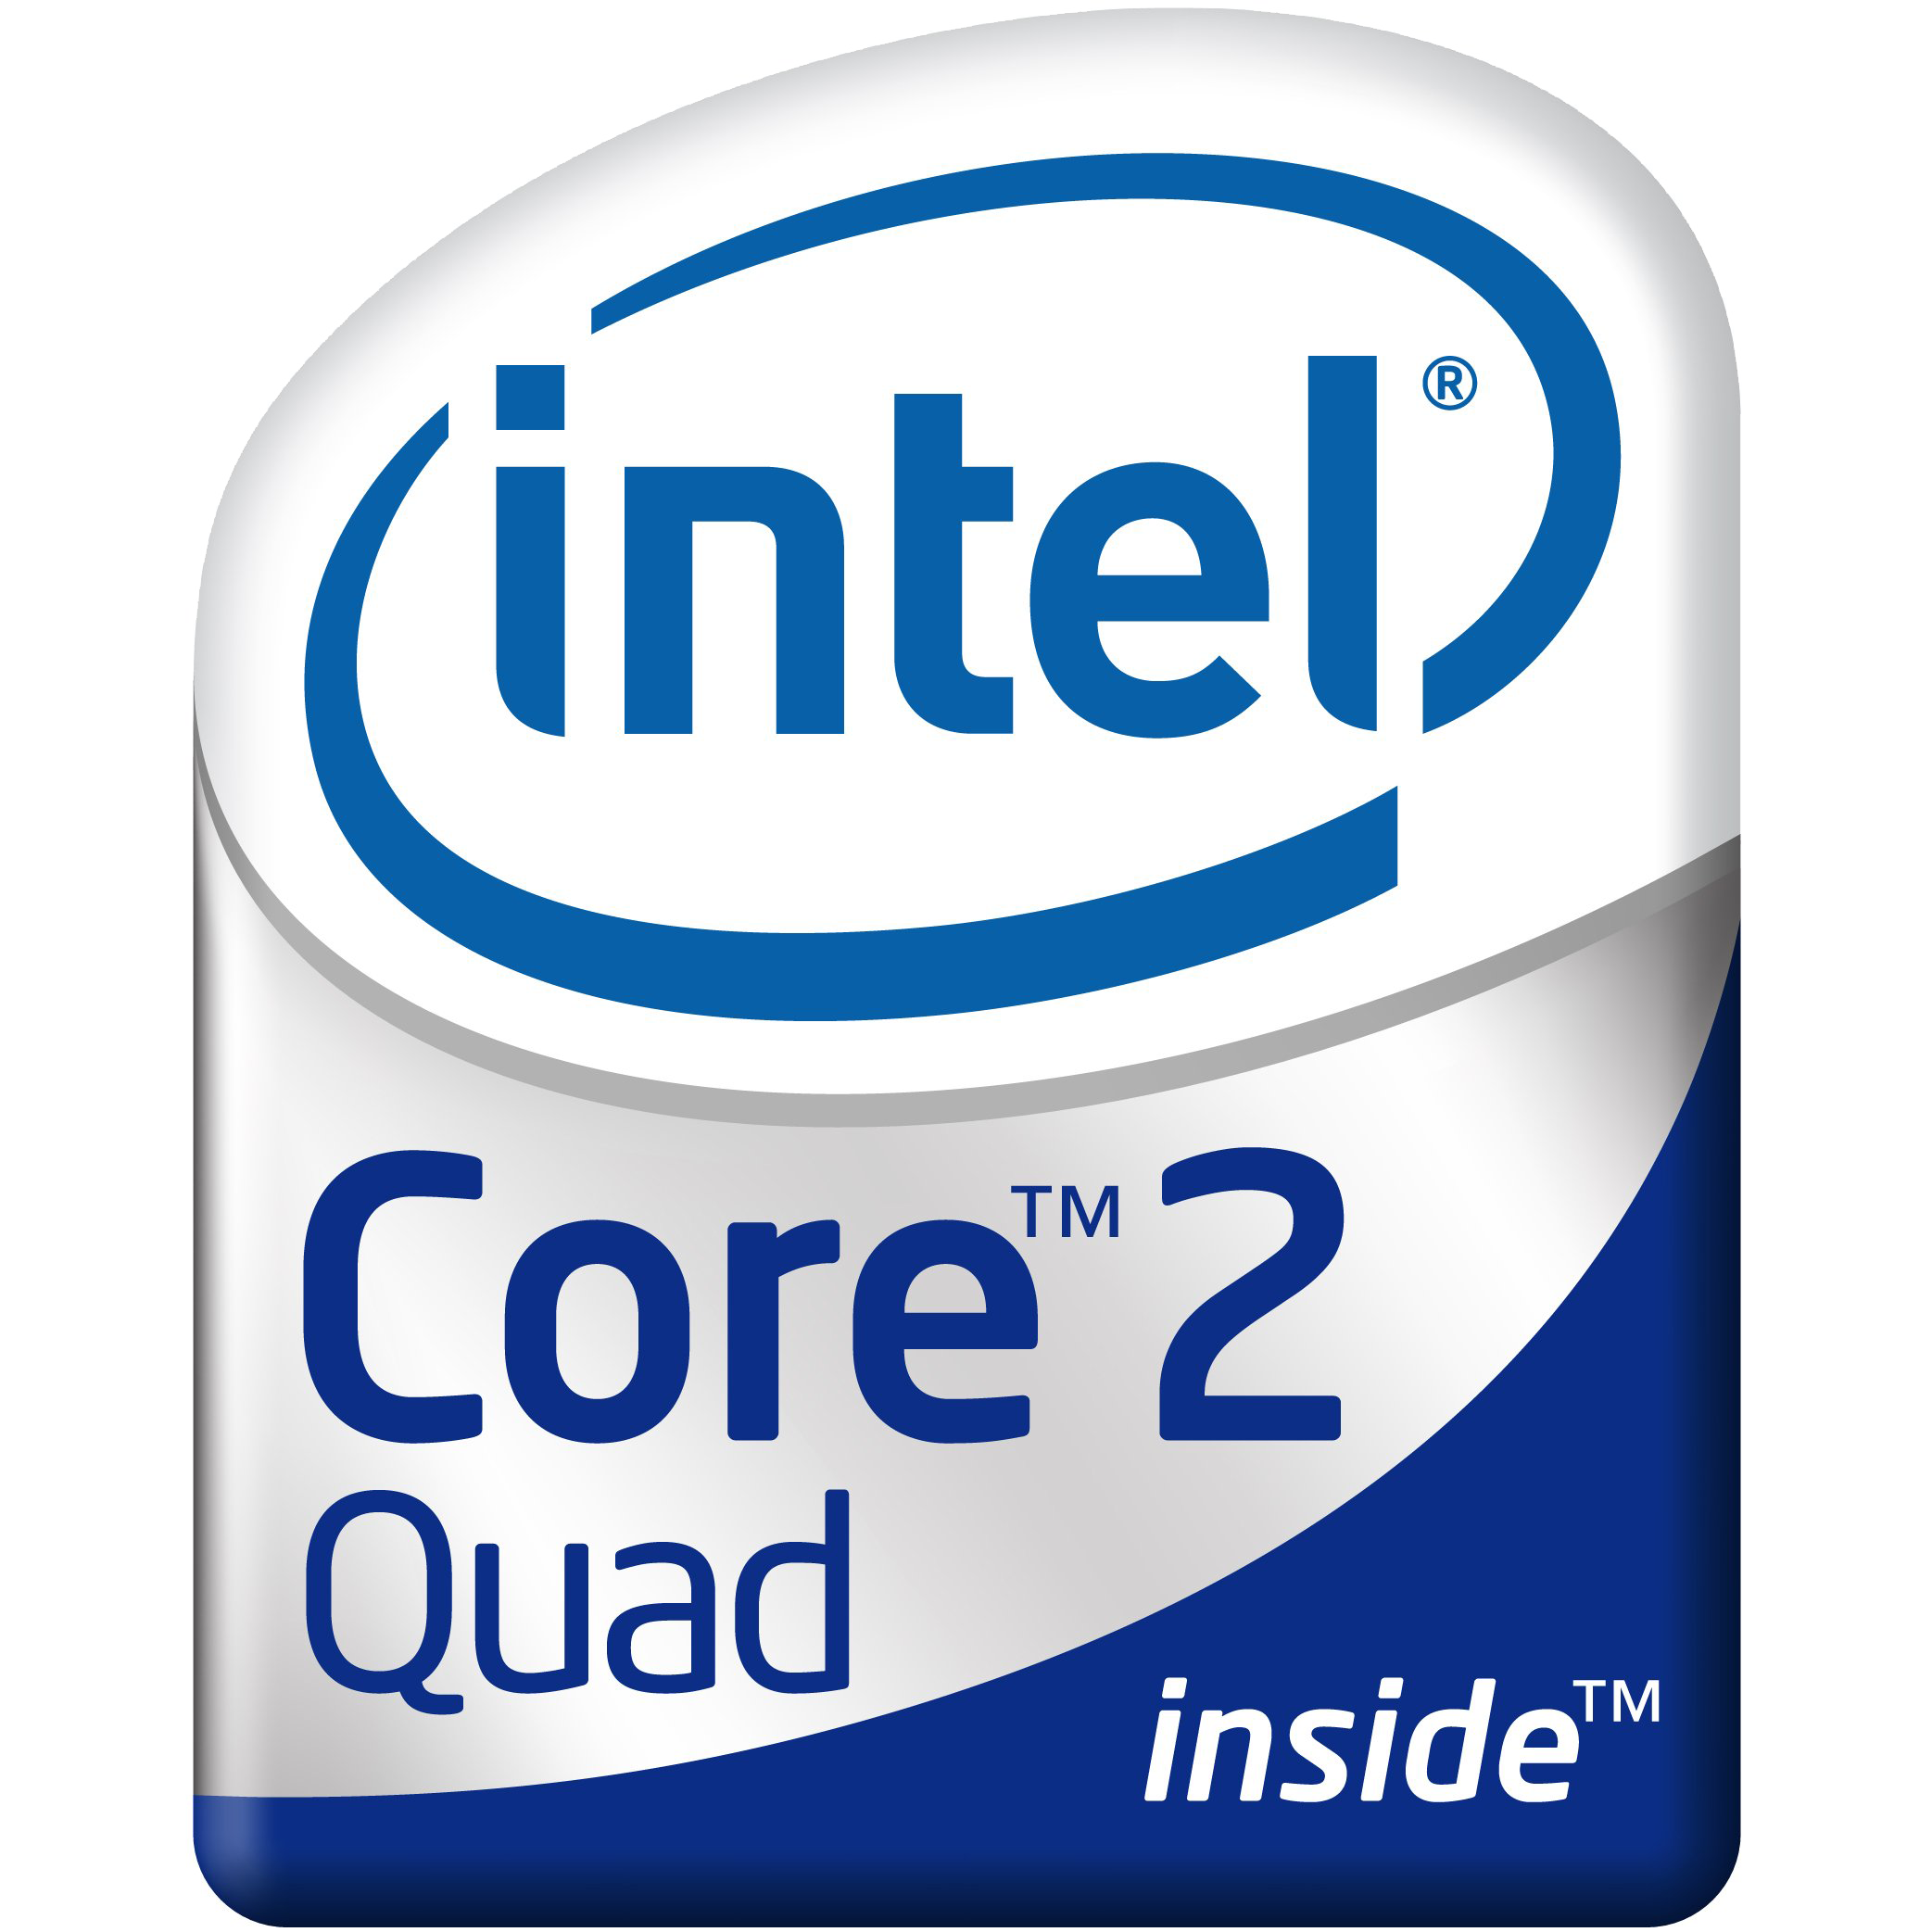 Core2 Quad logo